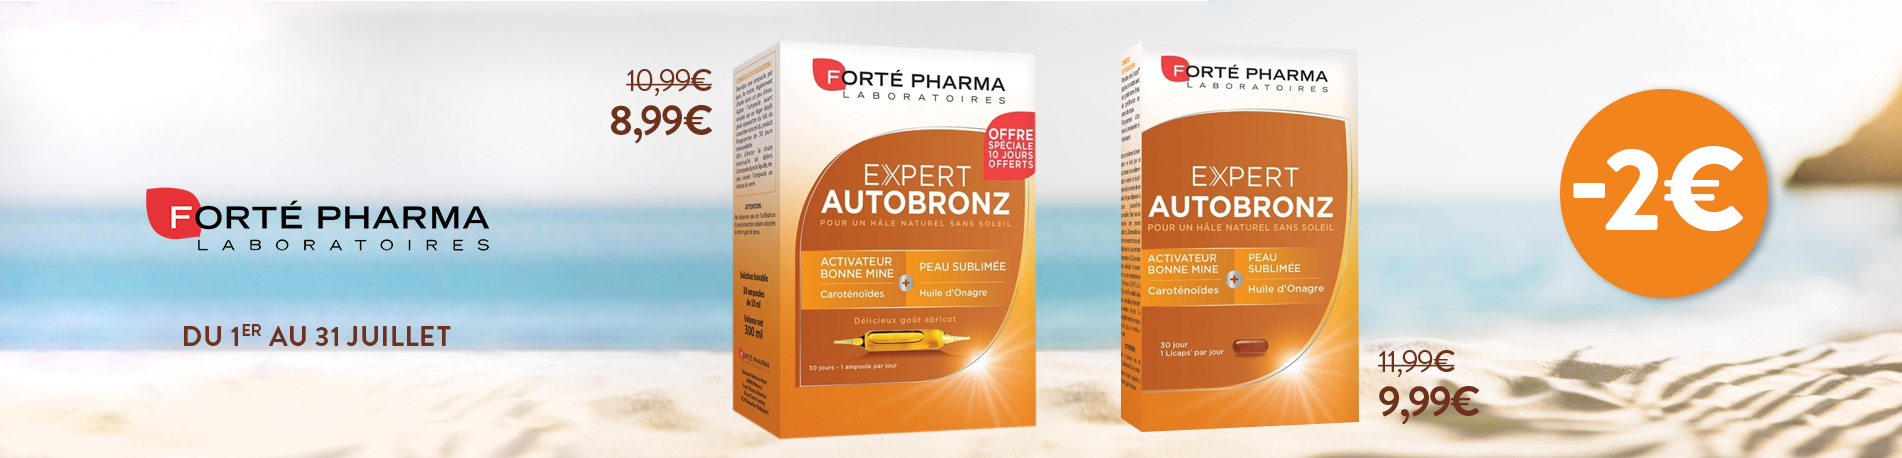 Promotion Forte Pharma Expert Autobronz